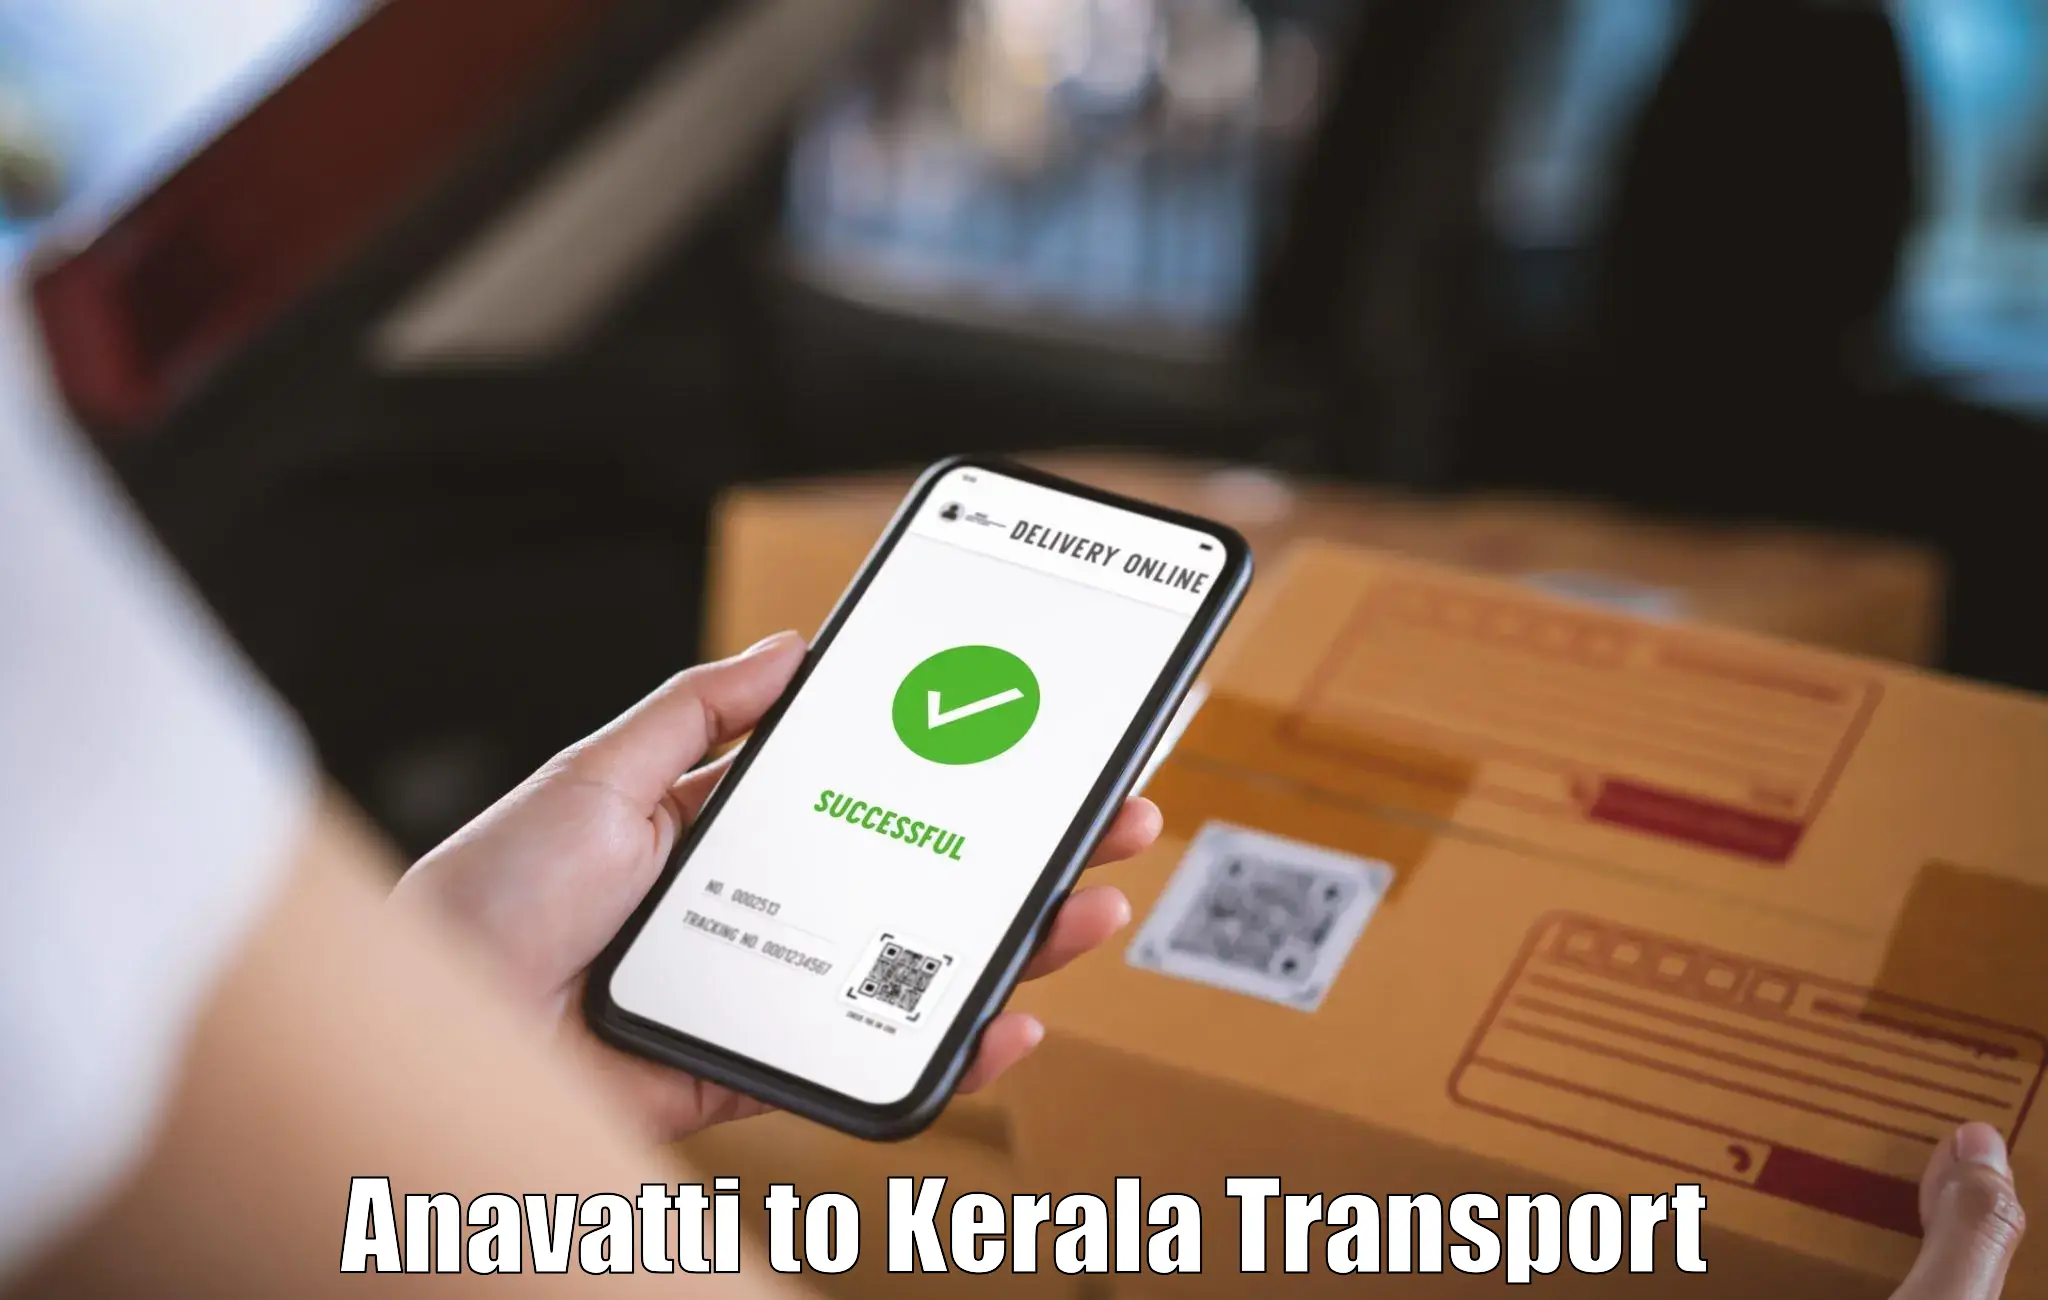 Transport in sharing Anavatti to Calicut